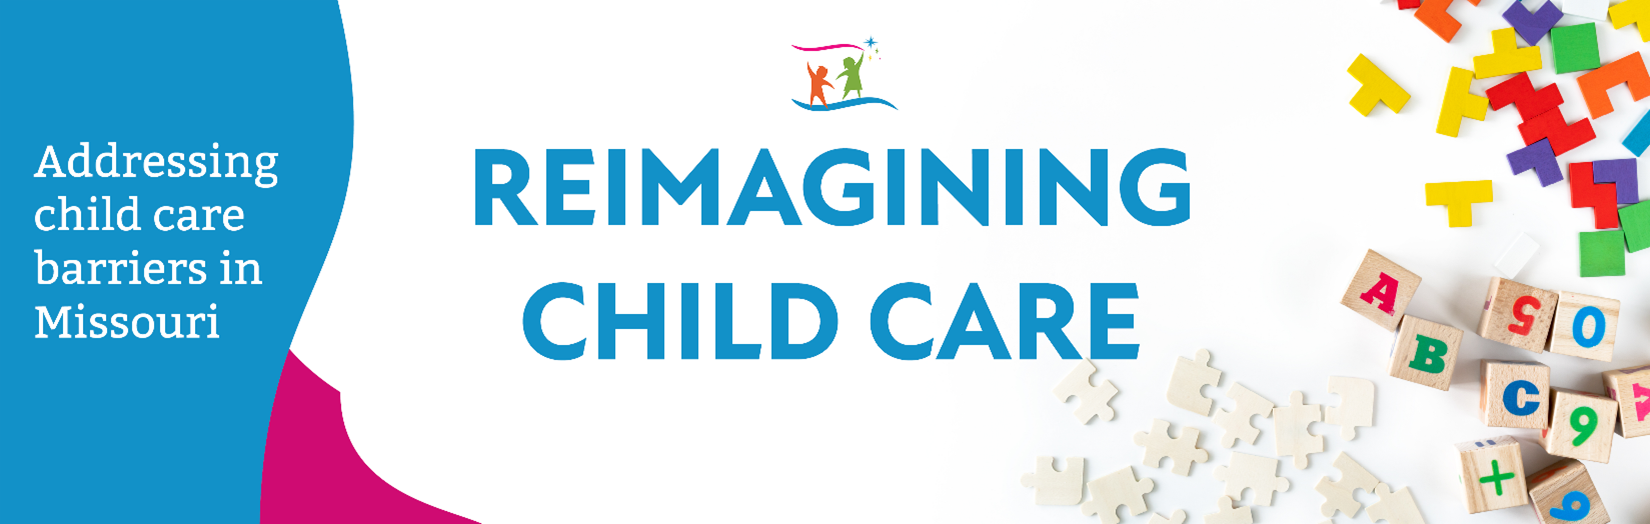 Addressing child care barriers in Missouri - Reimagining Child Care